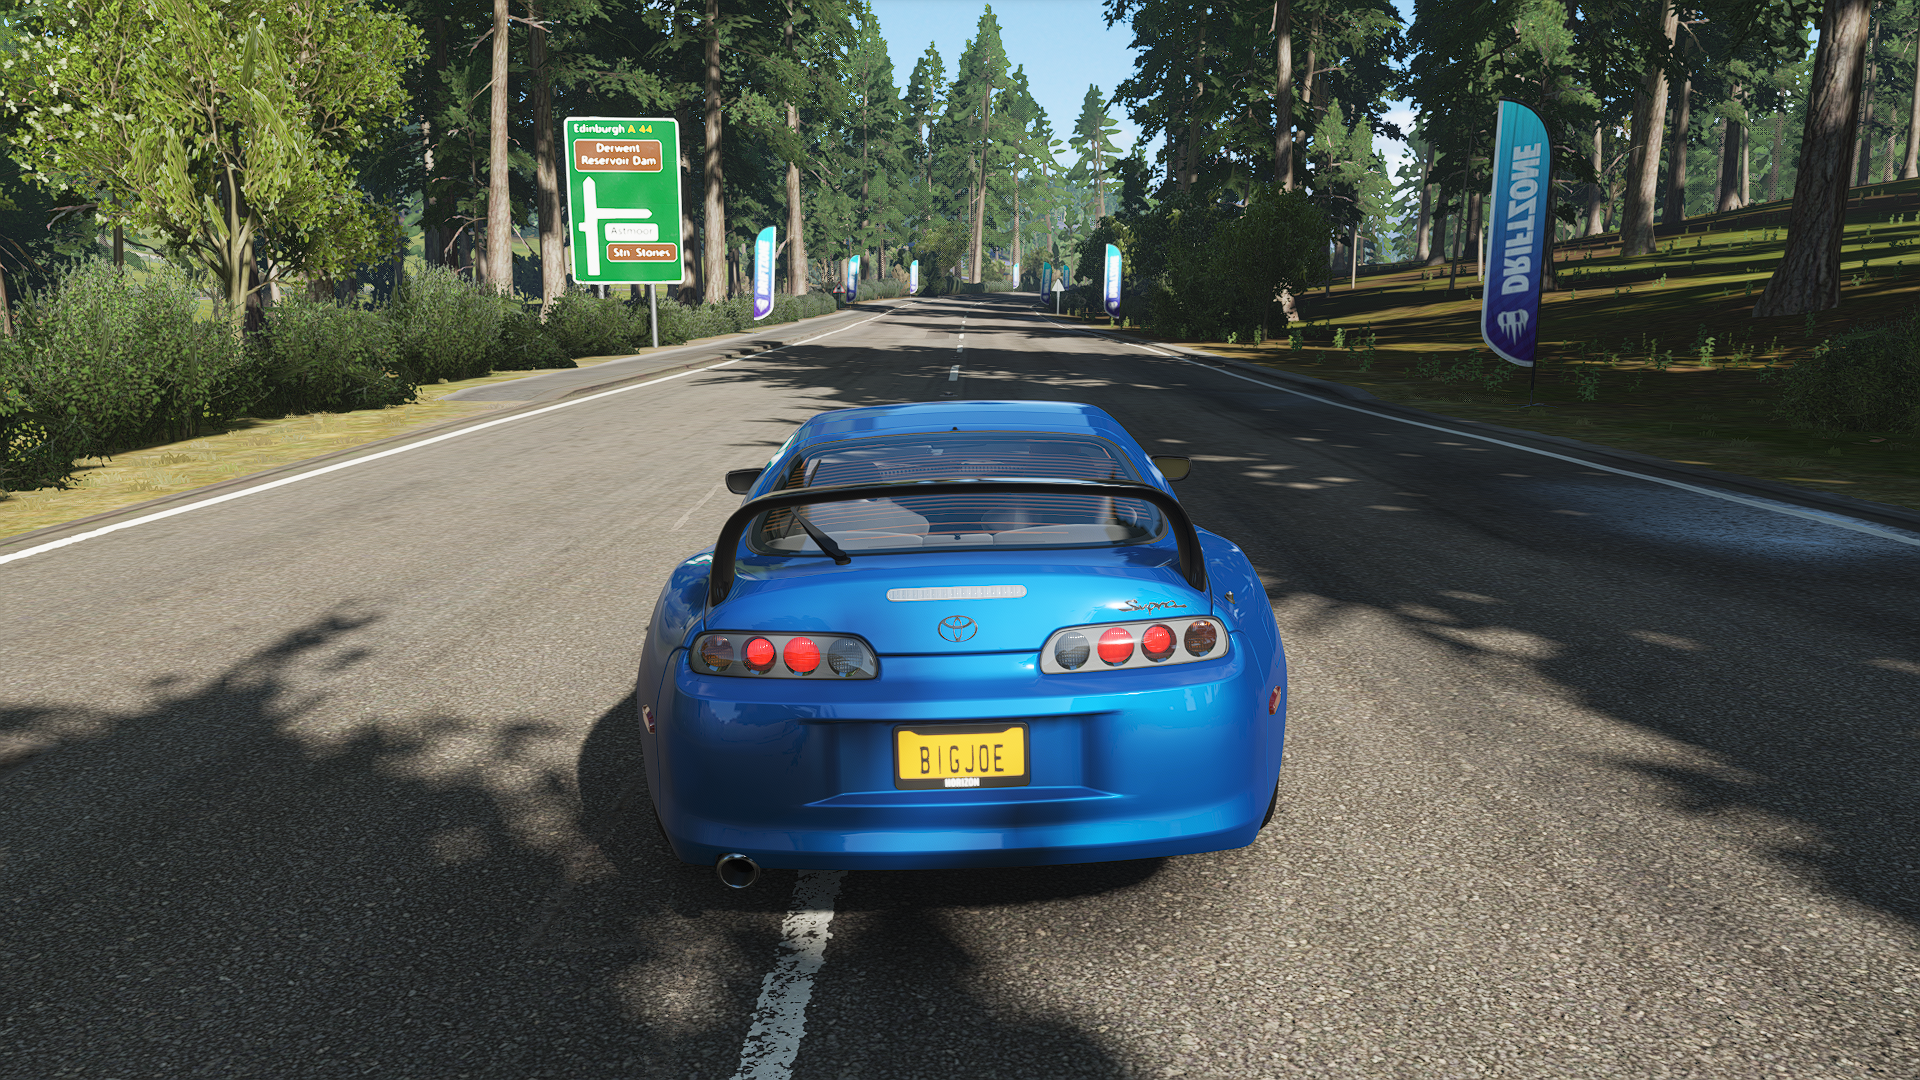 Car Forza Forza Horizon Forza Horizon 4 Racing Video Games Taillights Rear View Licence Plates Road  1920x1080